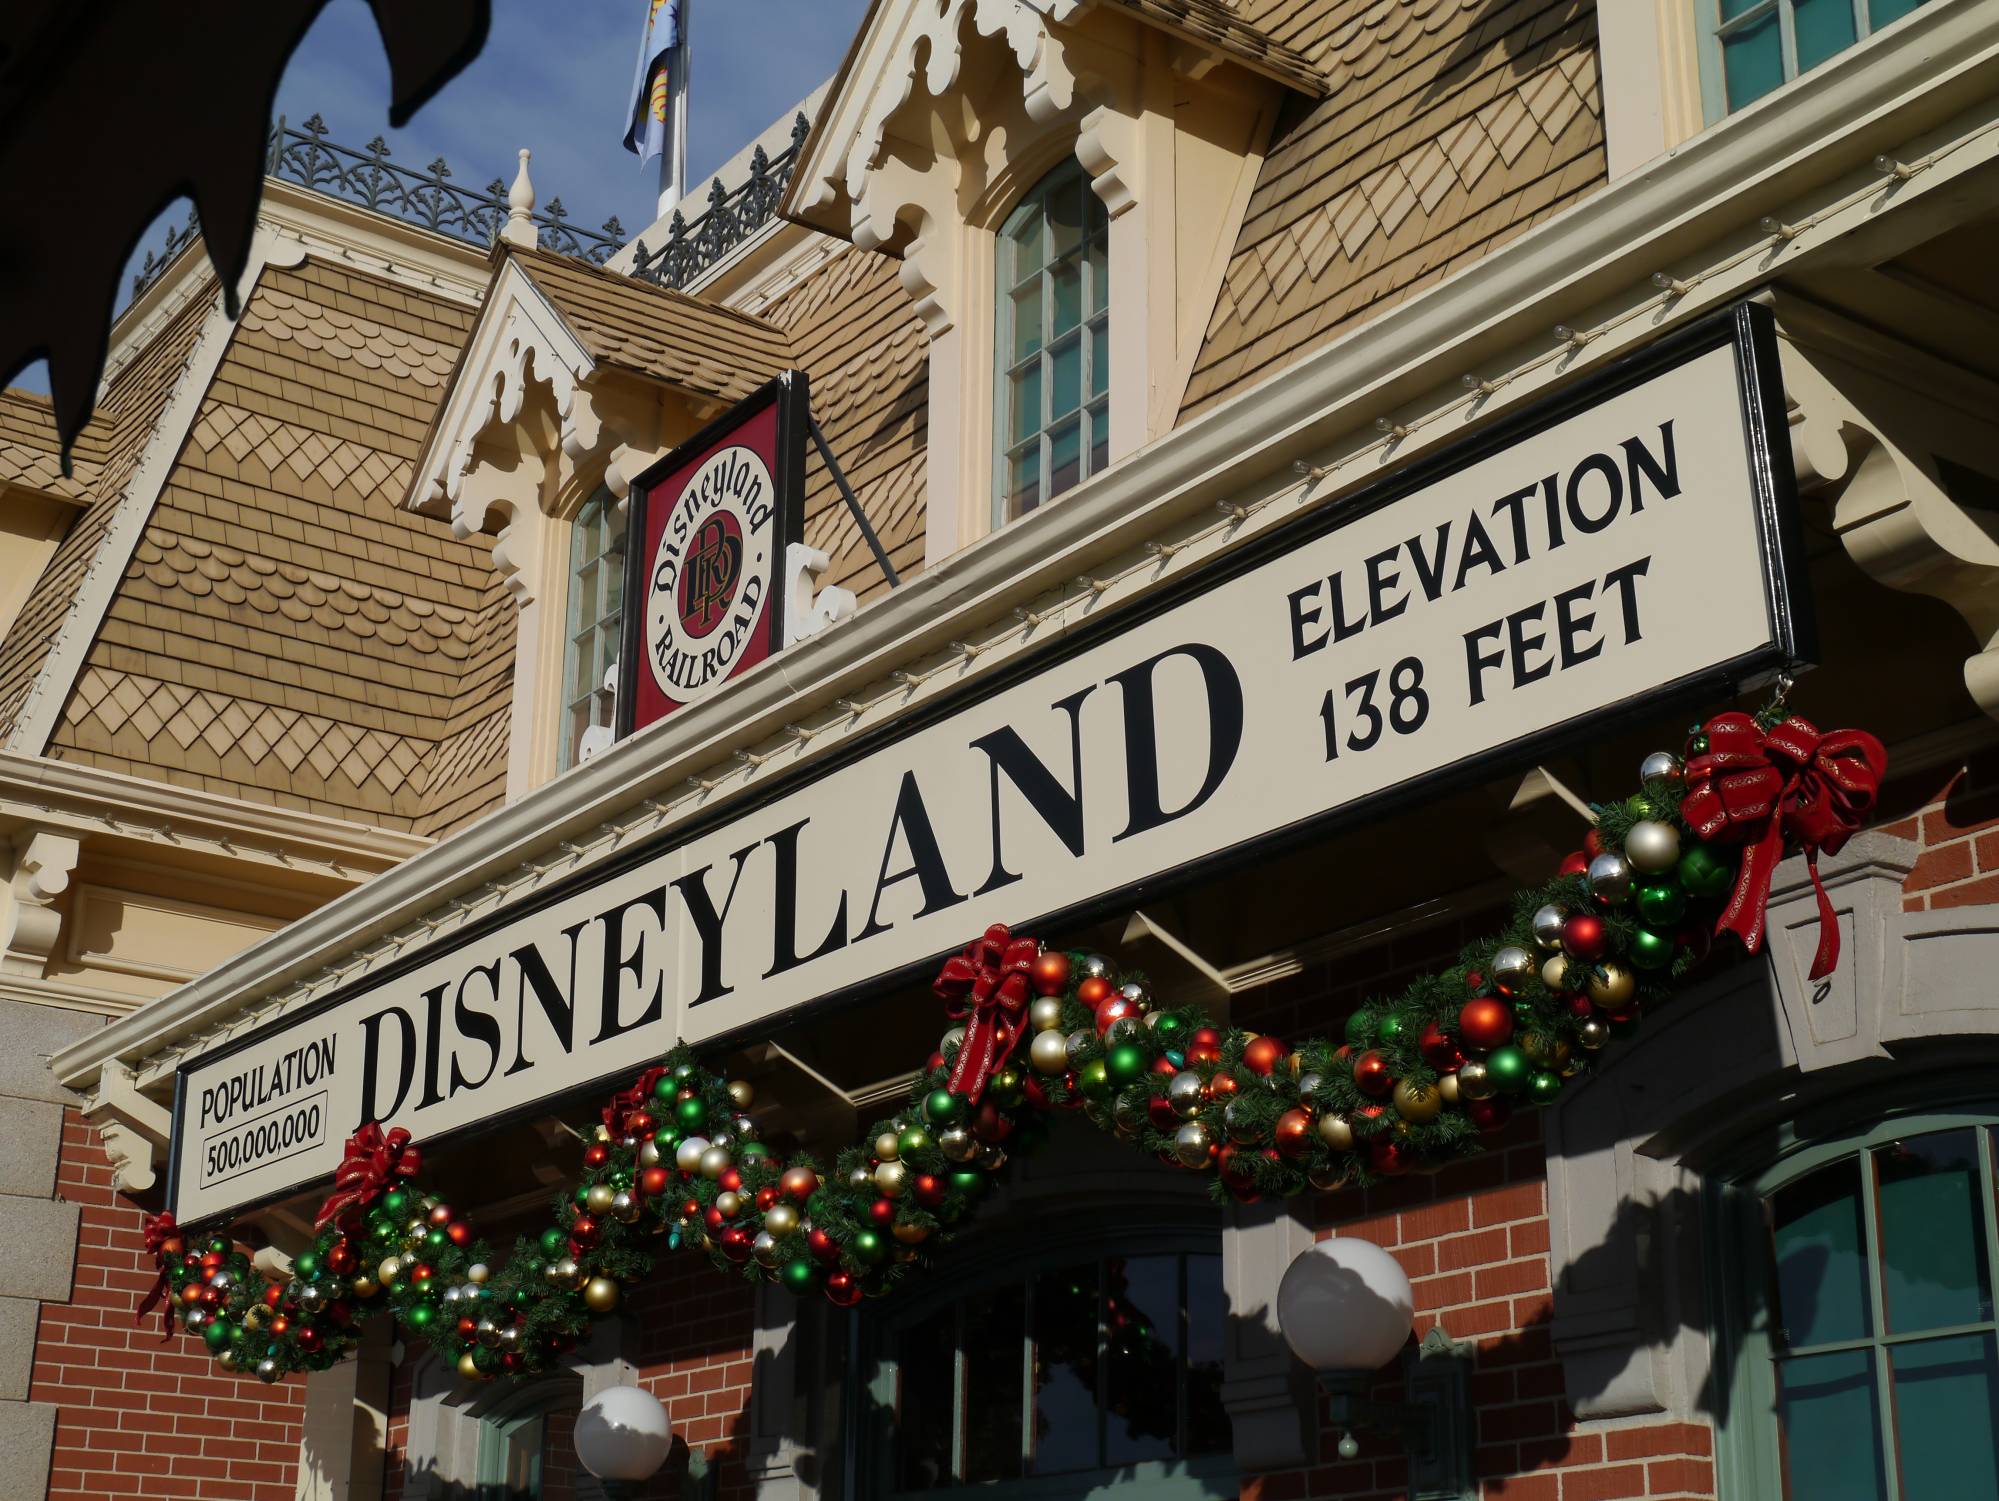 Disneyland Park - Disneyland Railroad sign